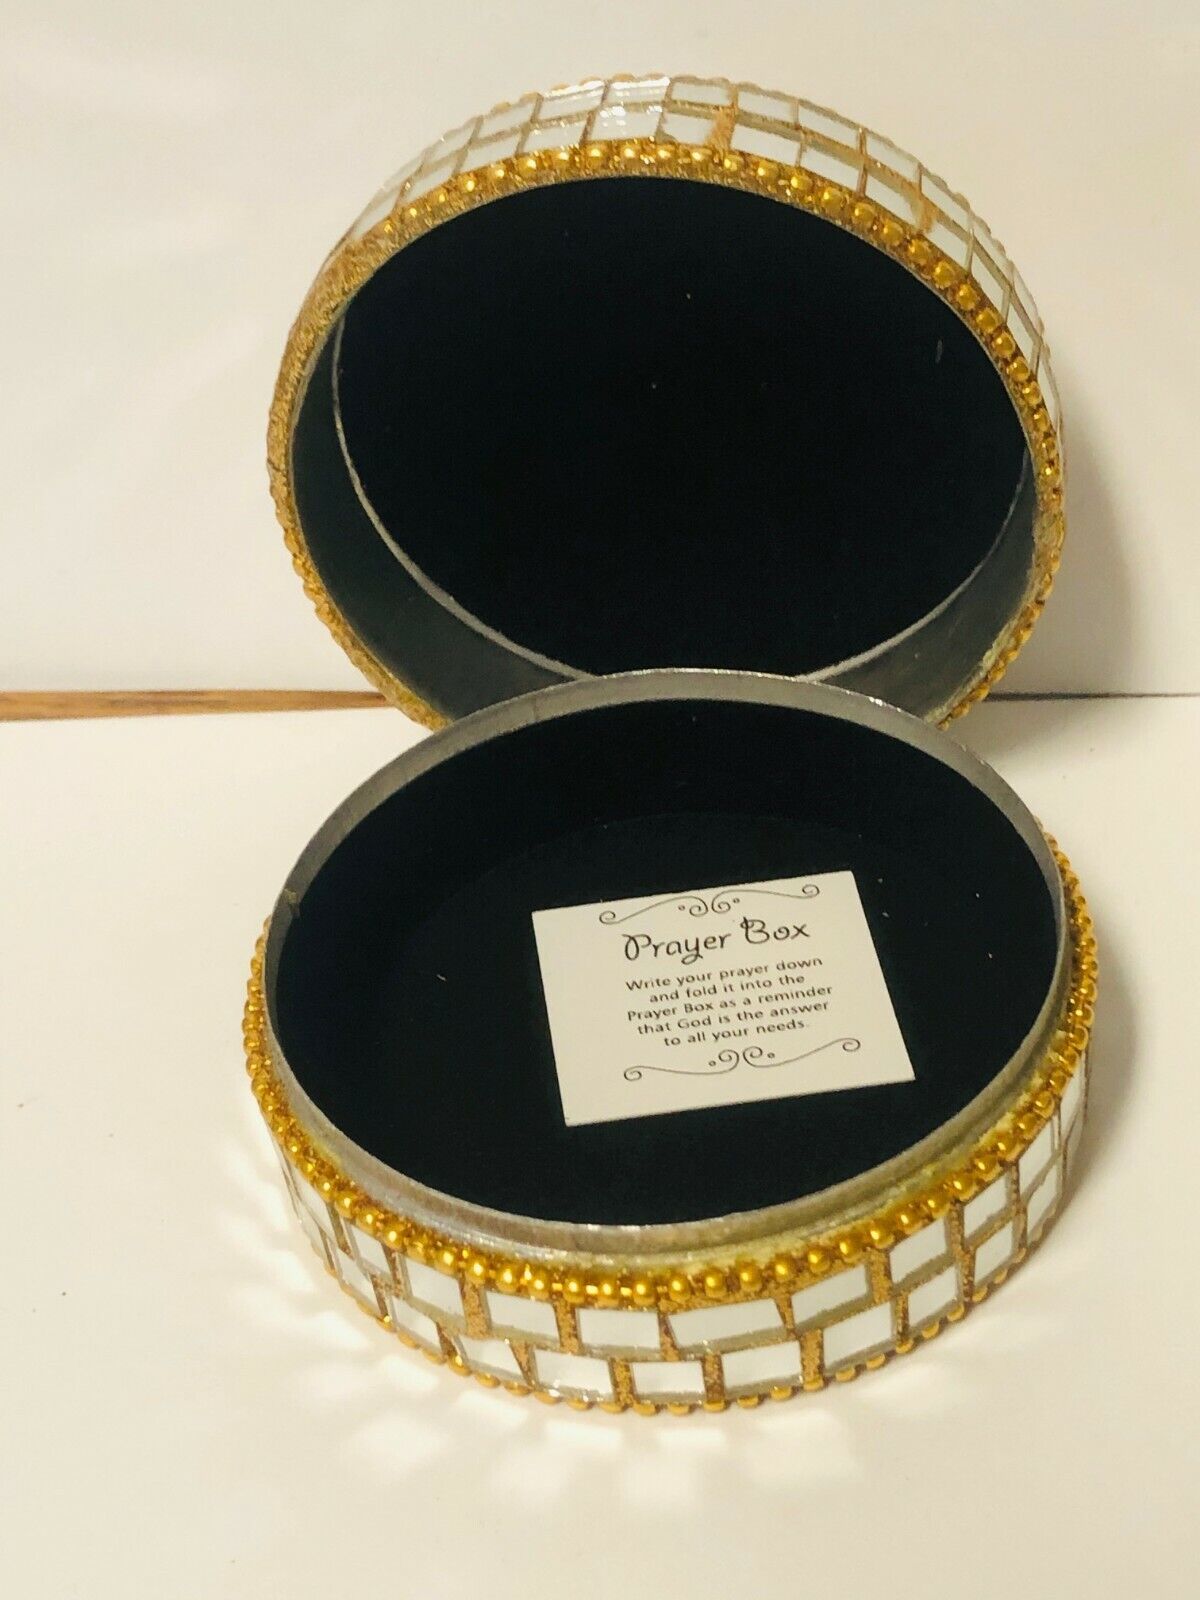 Prayer Box, Decorative Mirror/Gold Sequins Round Box, 3" New